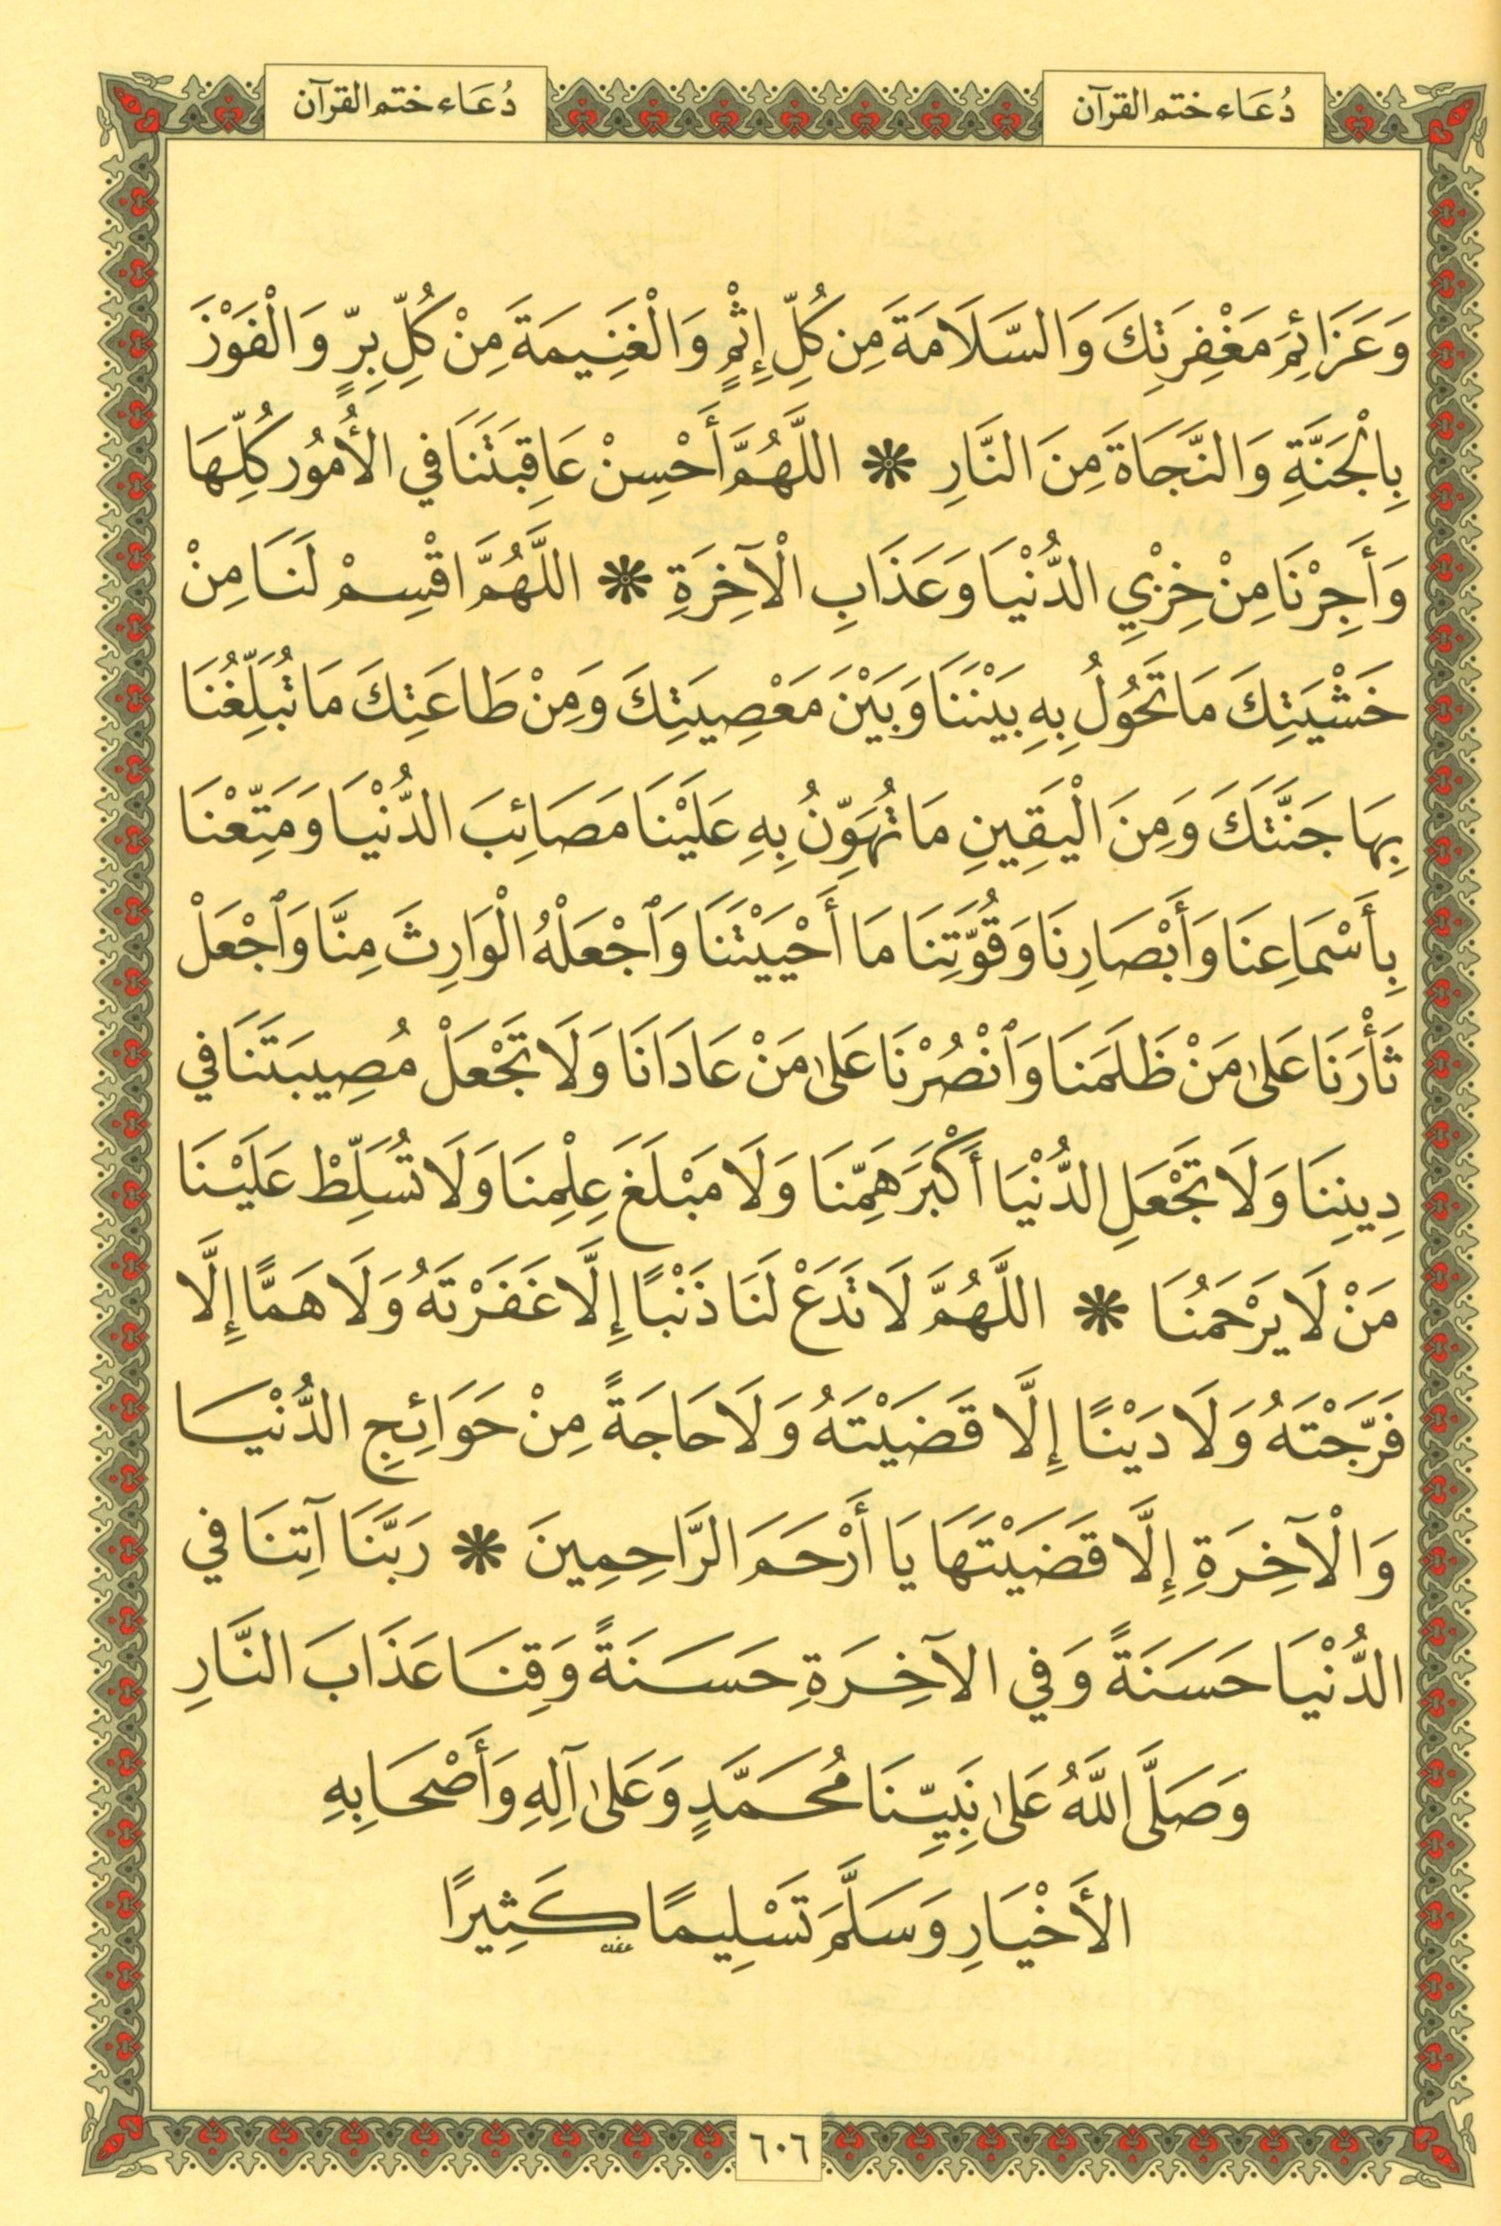 Colored Covers Hardcover Mushaf Al-Quran Al-Kareem 7" X 10" مصحف القرآن الكريم (Blue color)